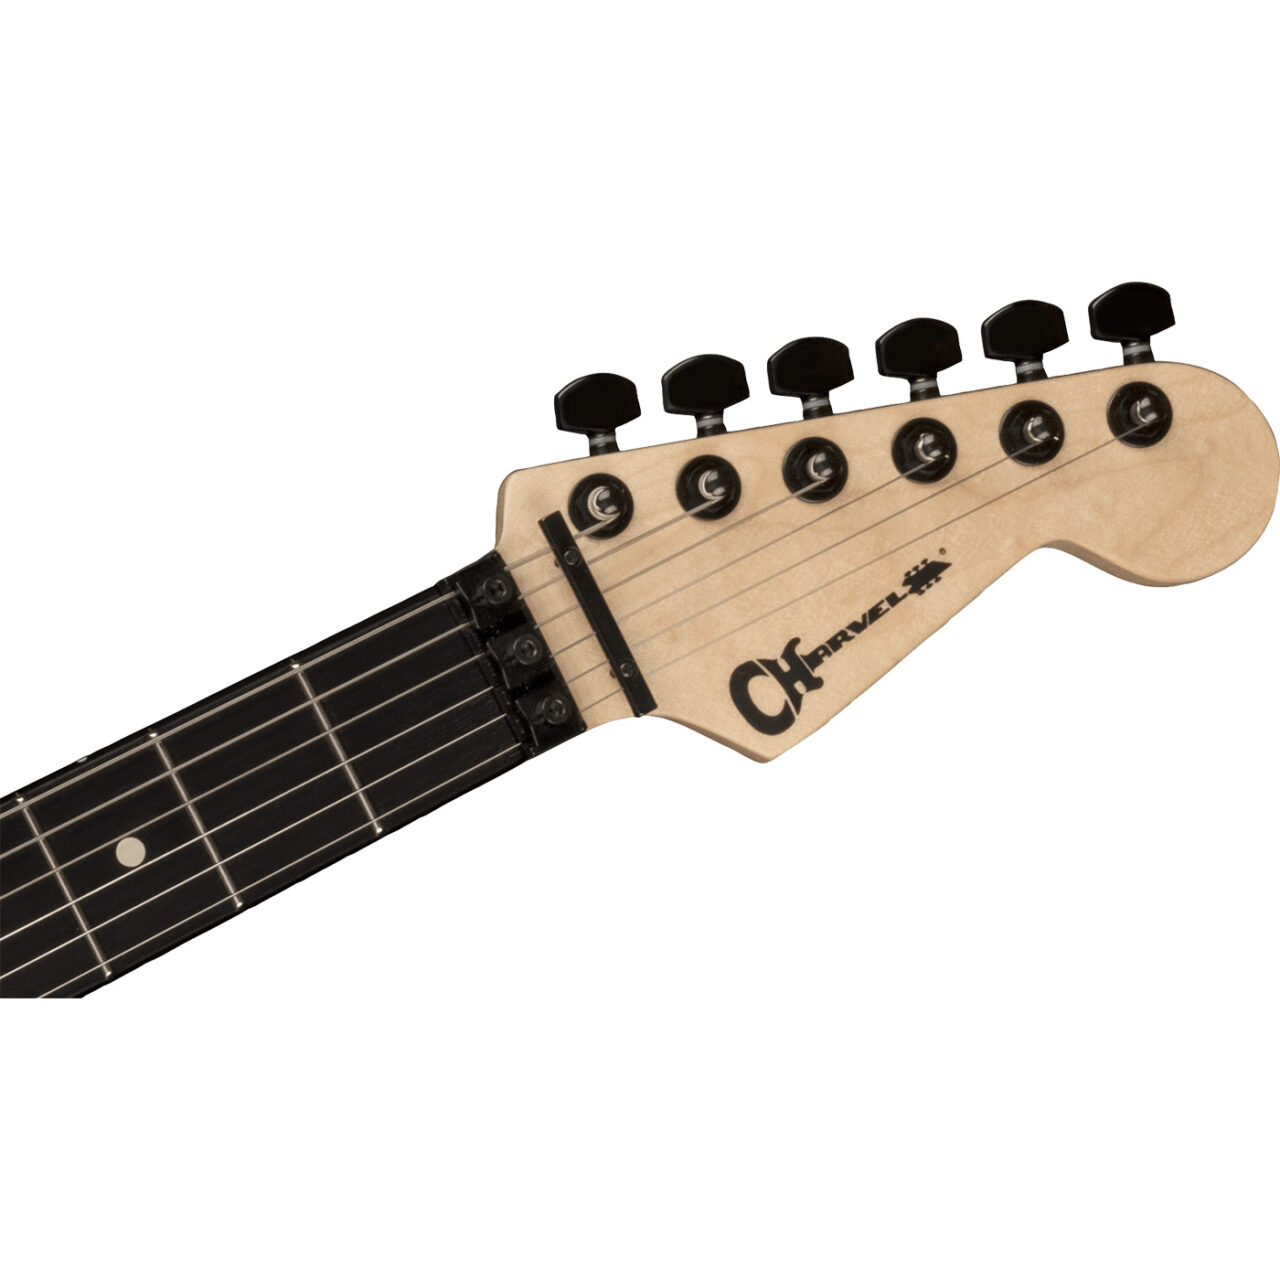 Charvel Pro-Mod So-Cal Style 1 HH FR E Satin Primer Gray エレキギター